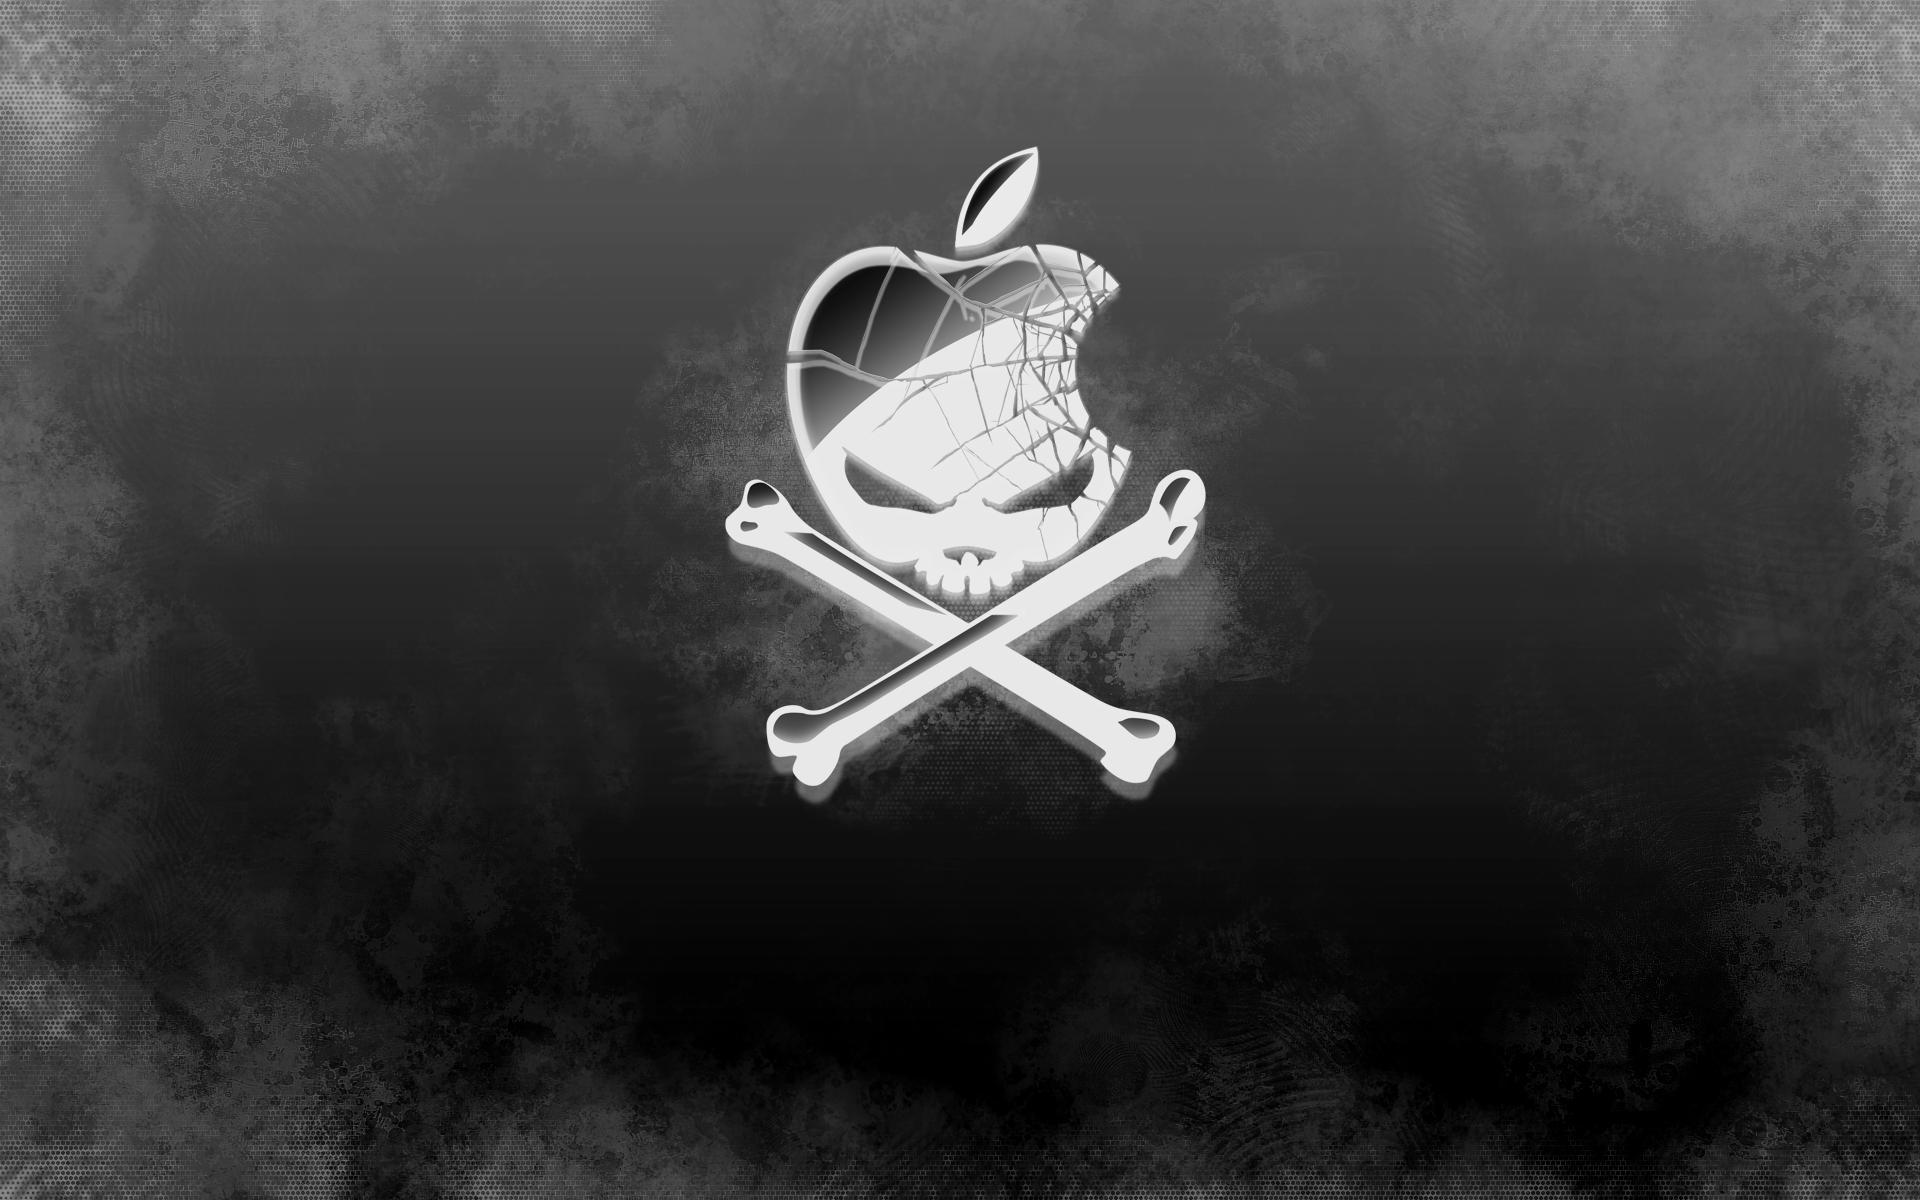 Cool Silver Logo - Cool Apple Logo Wallpaper